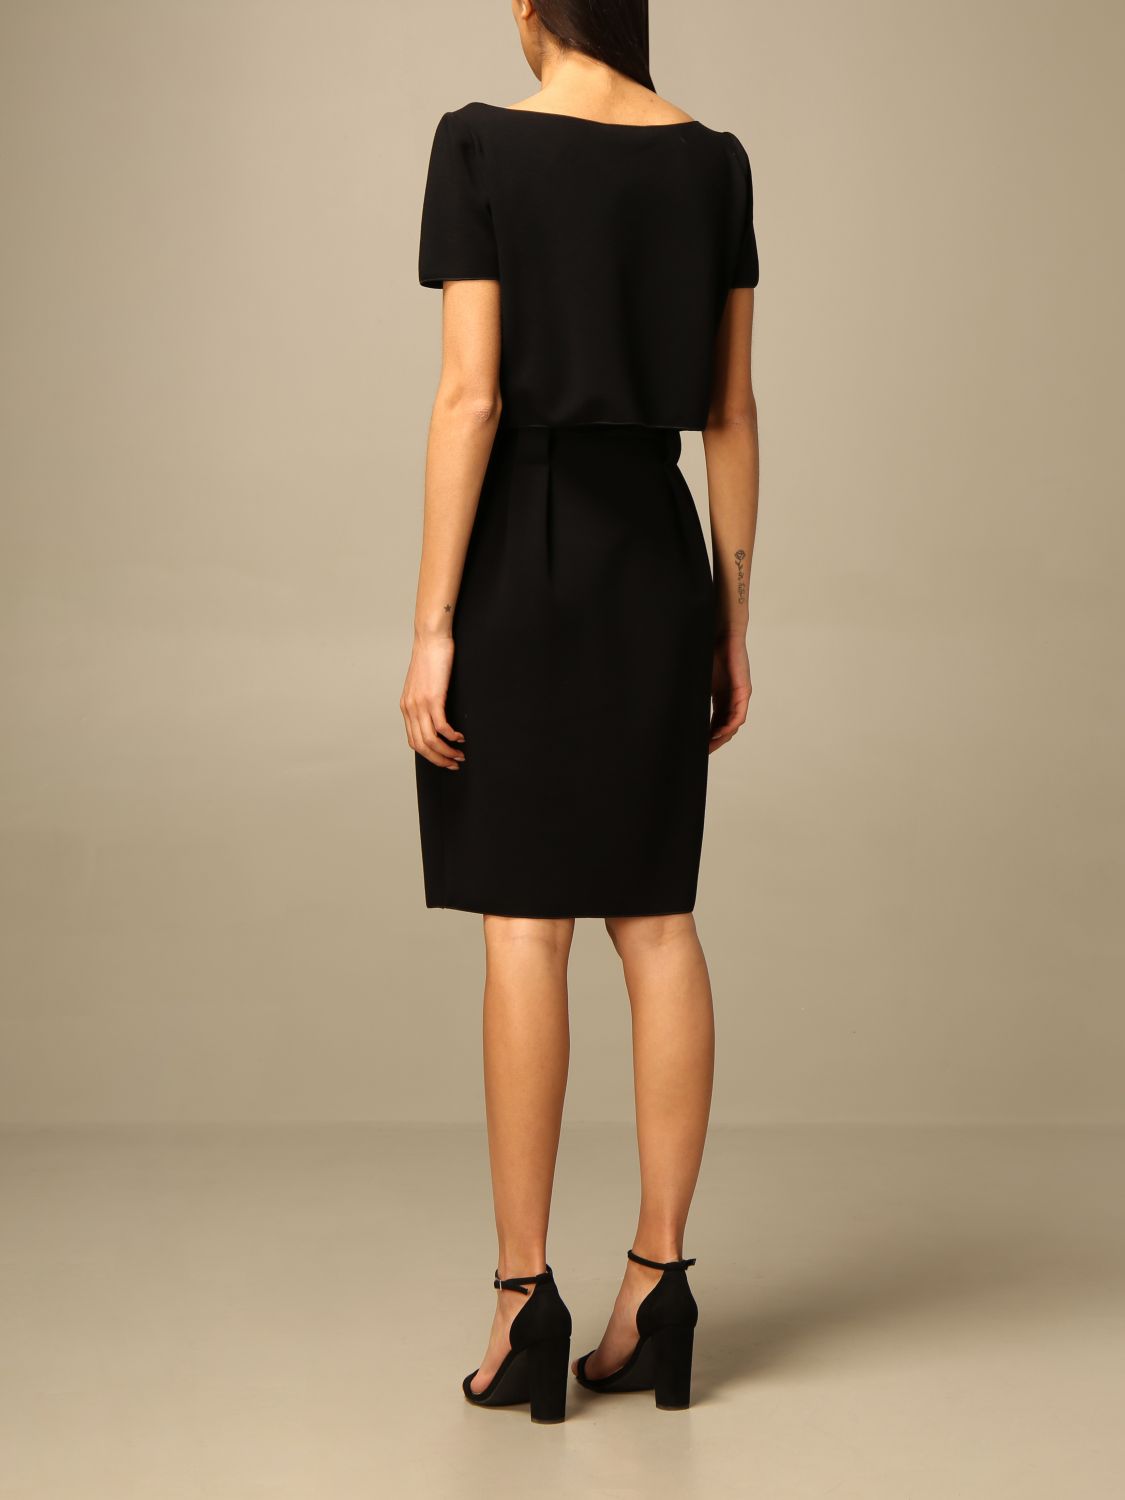 EMPORIO ARMANI: short dress with ribbons - Black | Emporio Armani dress  3K2A8I 2JCFZ online on 